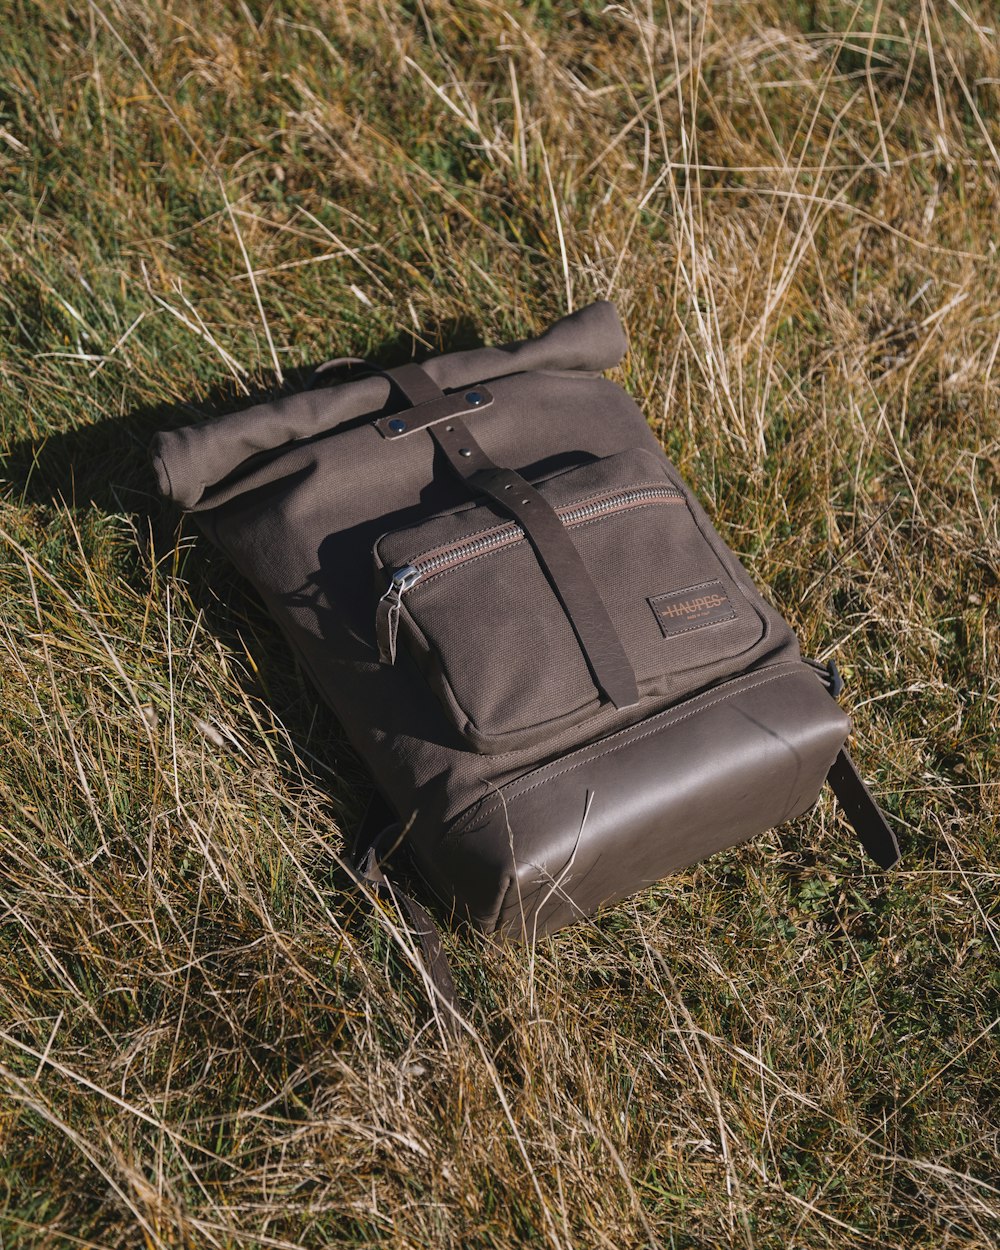 a black bag on grass